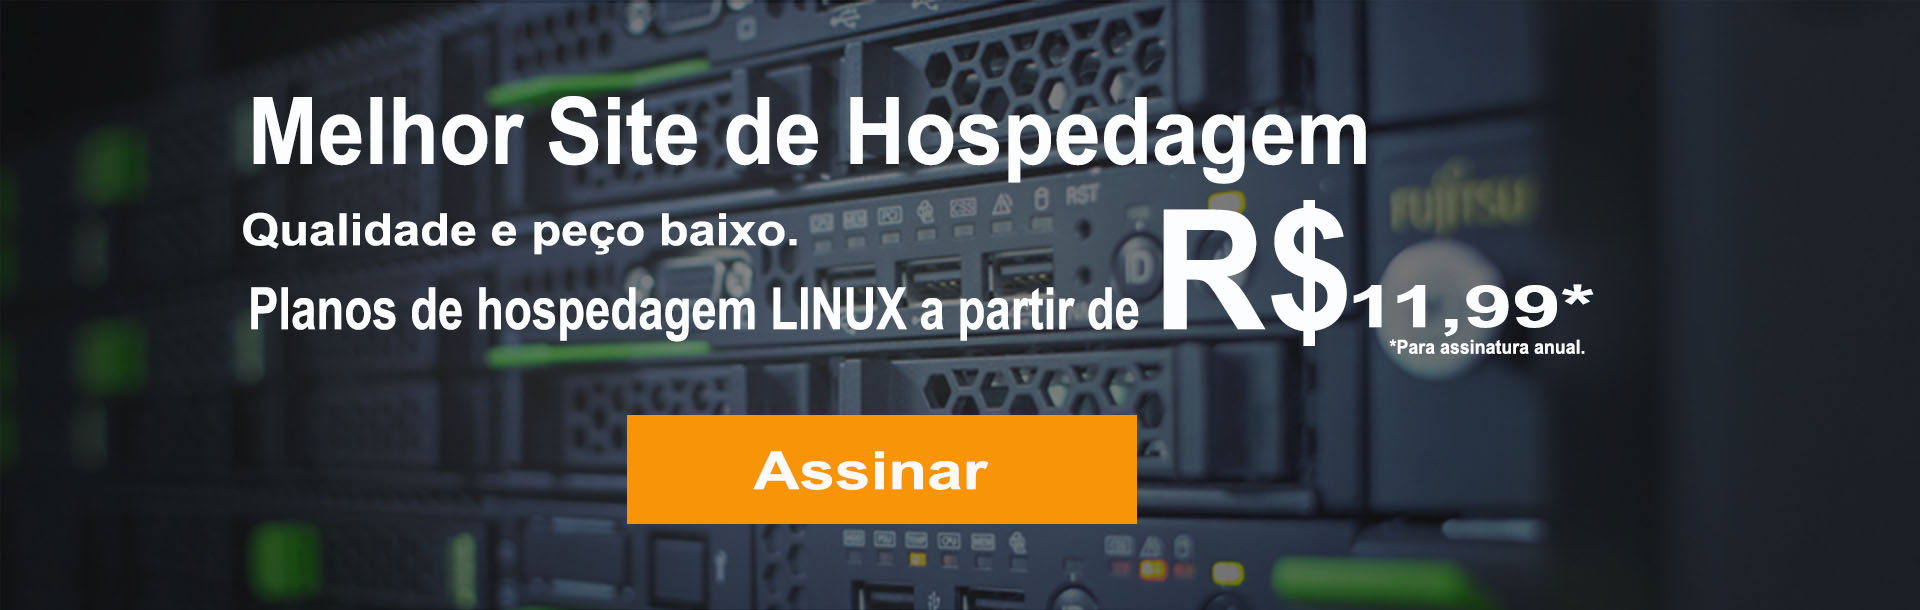 oliveiraHost - Hospedagem Linux R$11,900